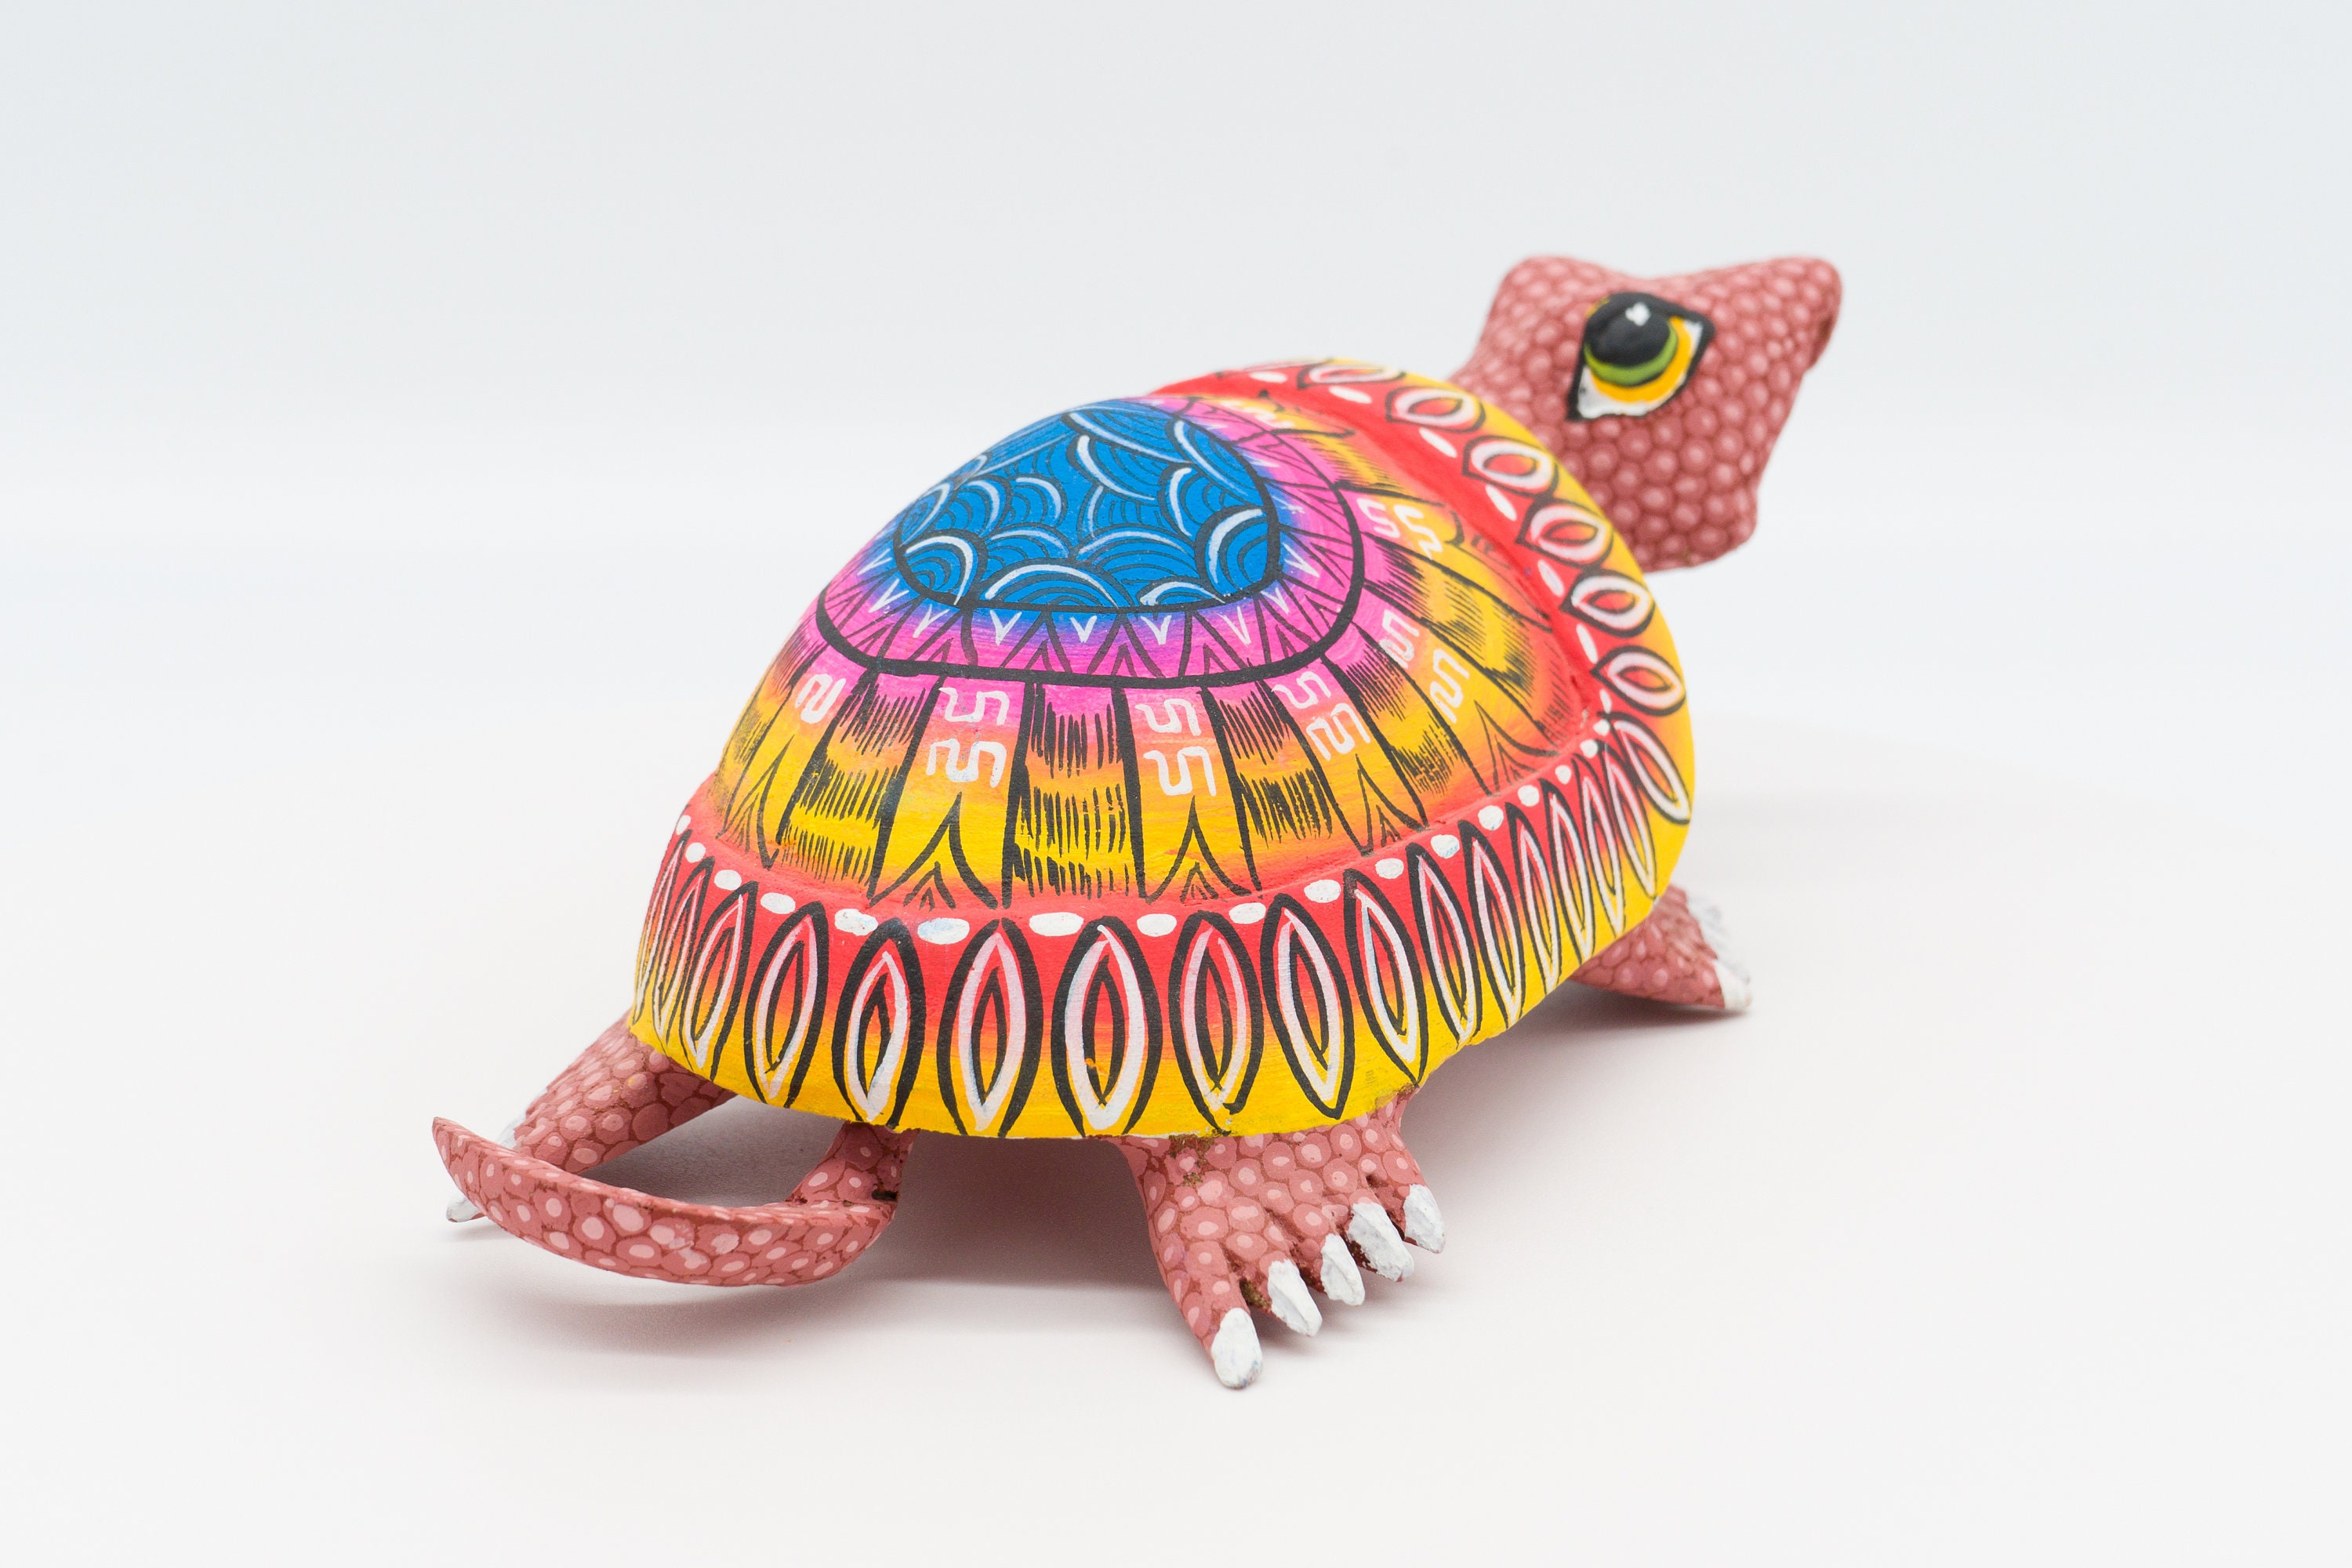 Mini Turtles Alebrije Handcarve Wood Decoration Figure